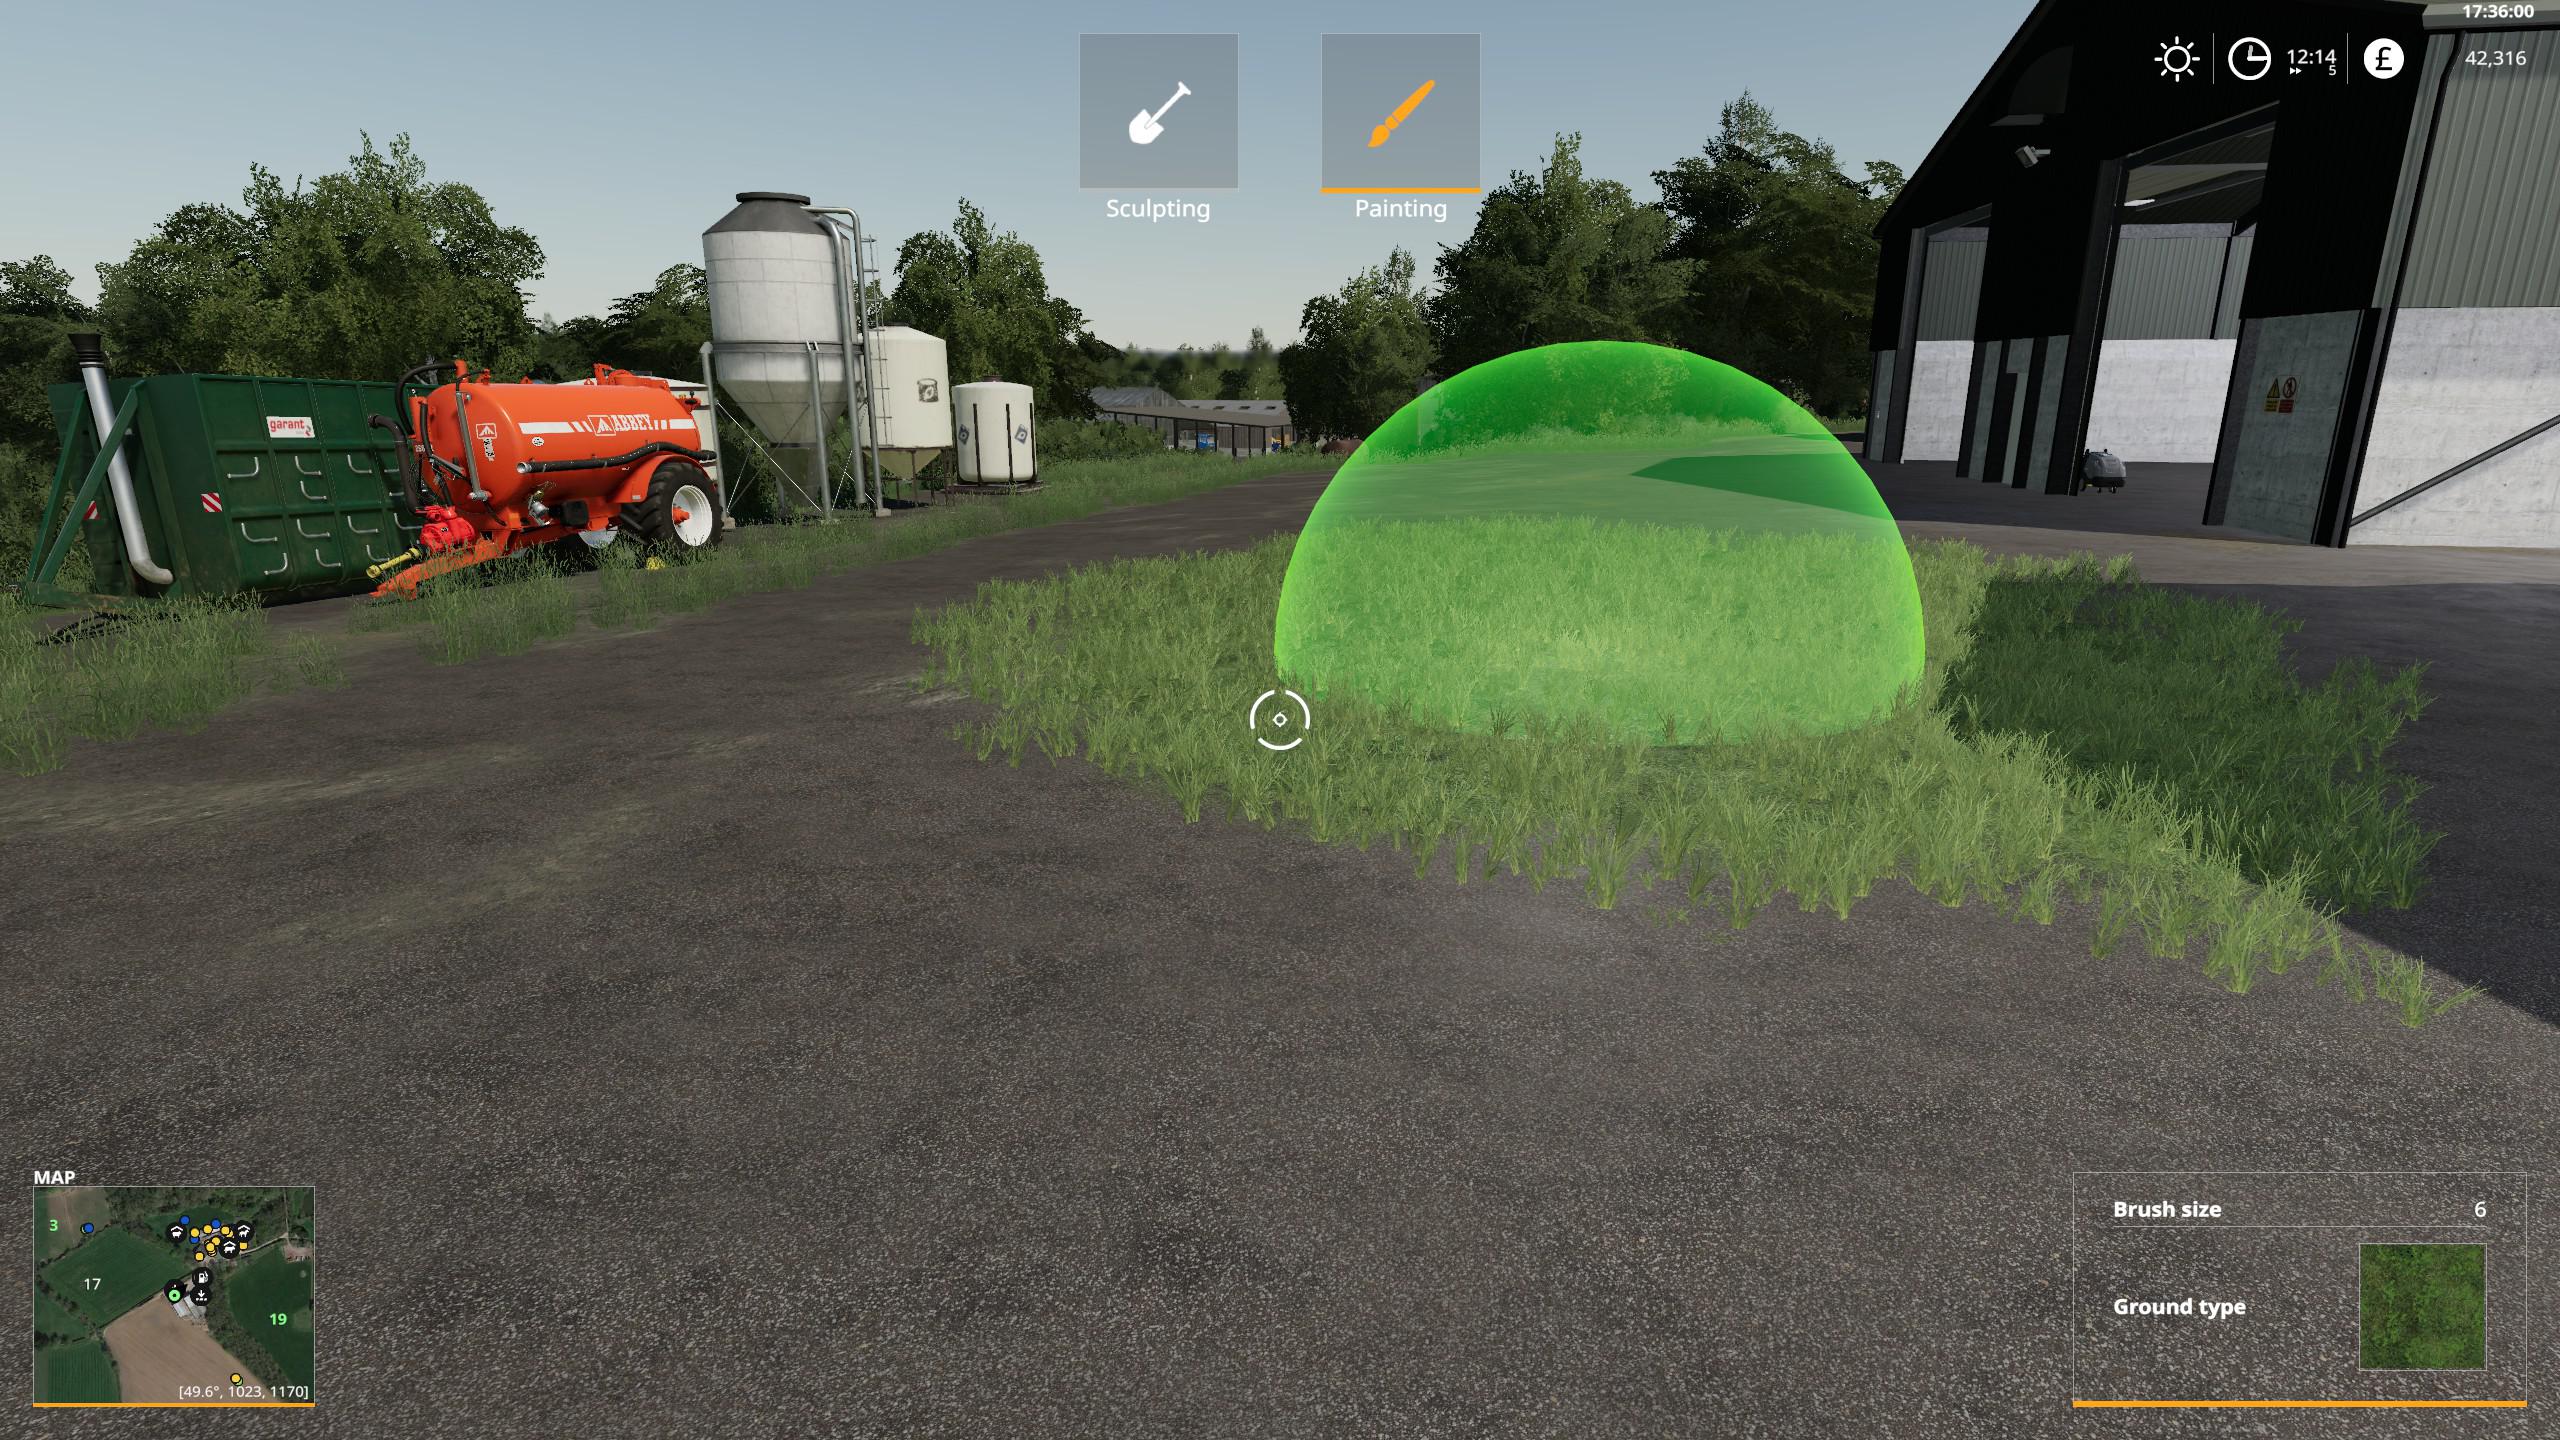 Fs19 Grass Texture V10 Farming Simulator 19 Mods Images And Photos Finder 7692